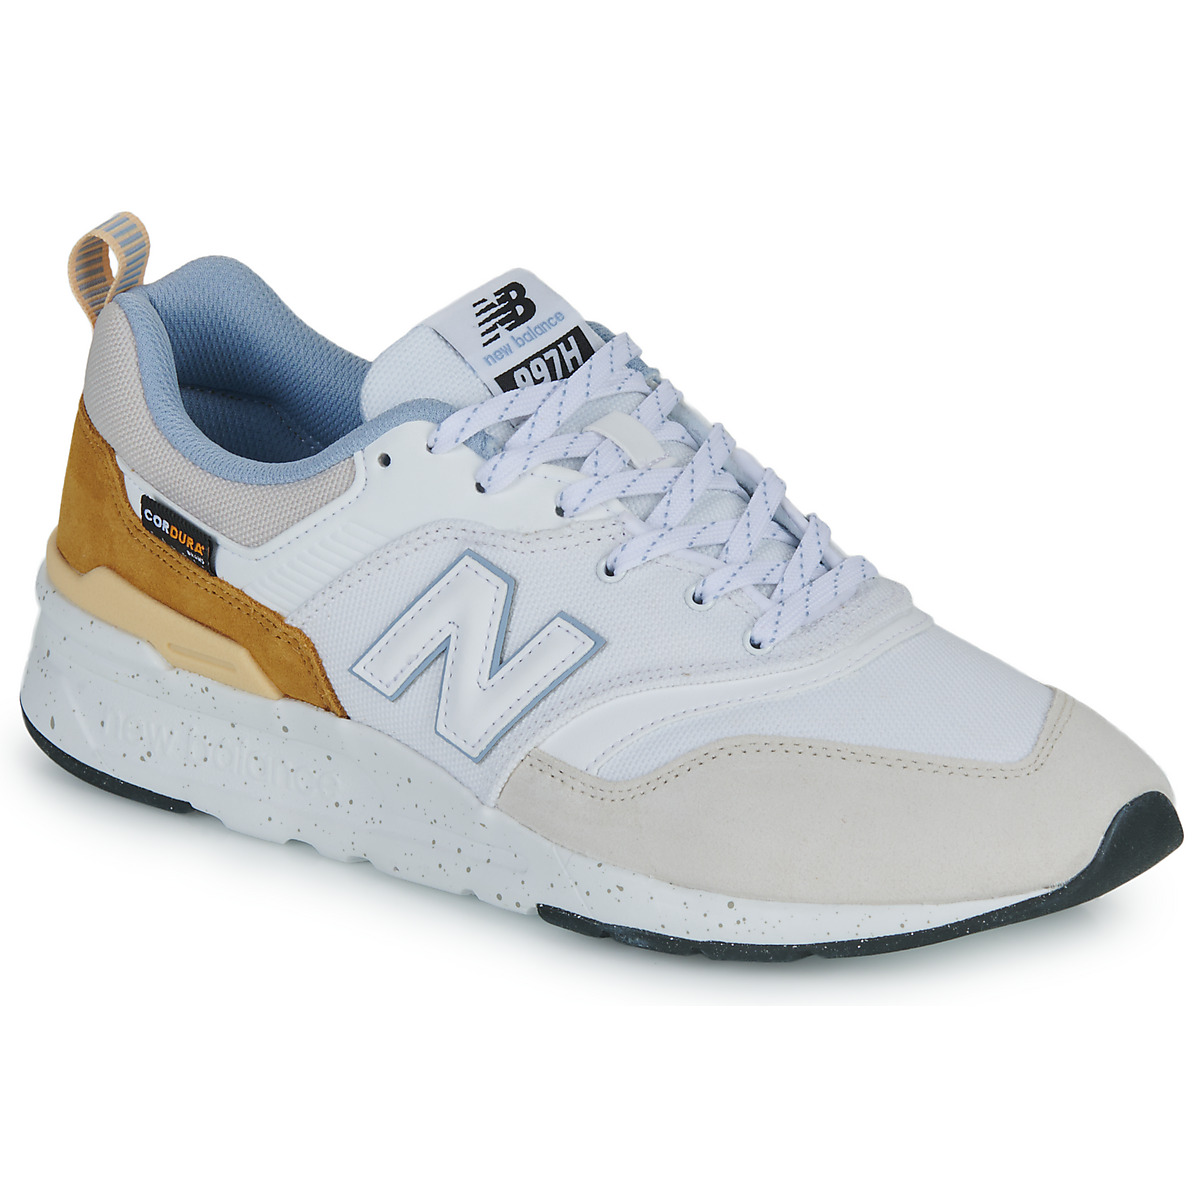 Xαμηλά Sneakers New Balance 997